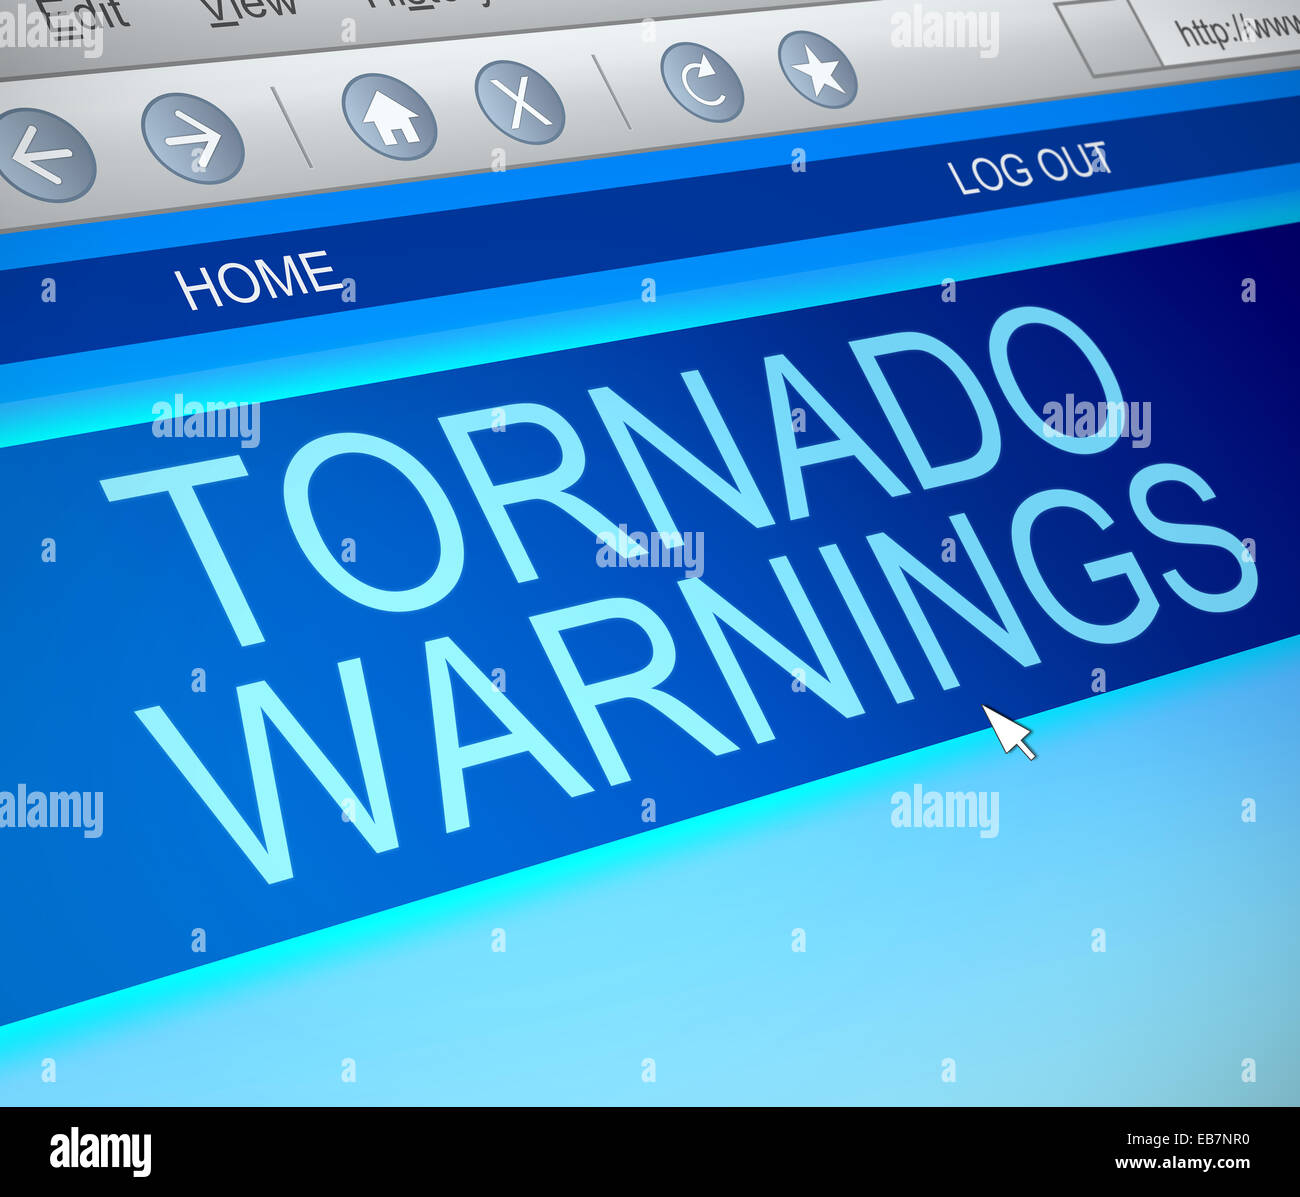 Tornado warning concept. Stock Photo